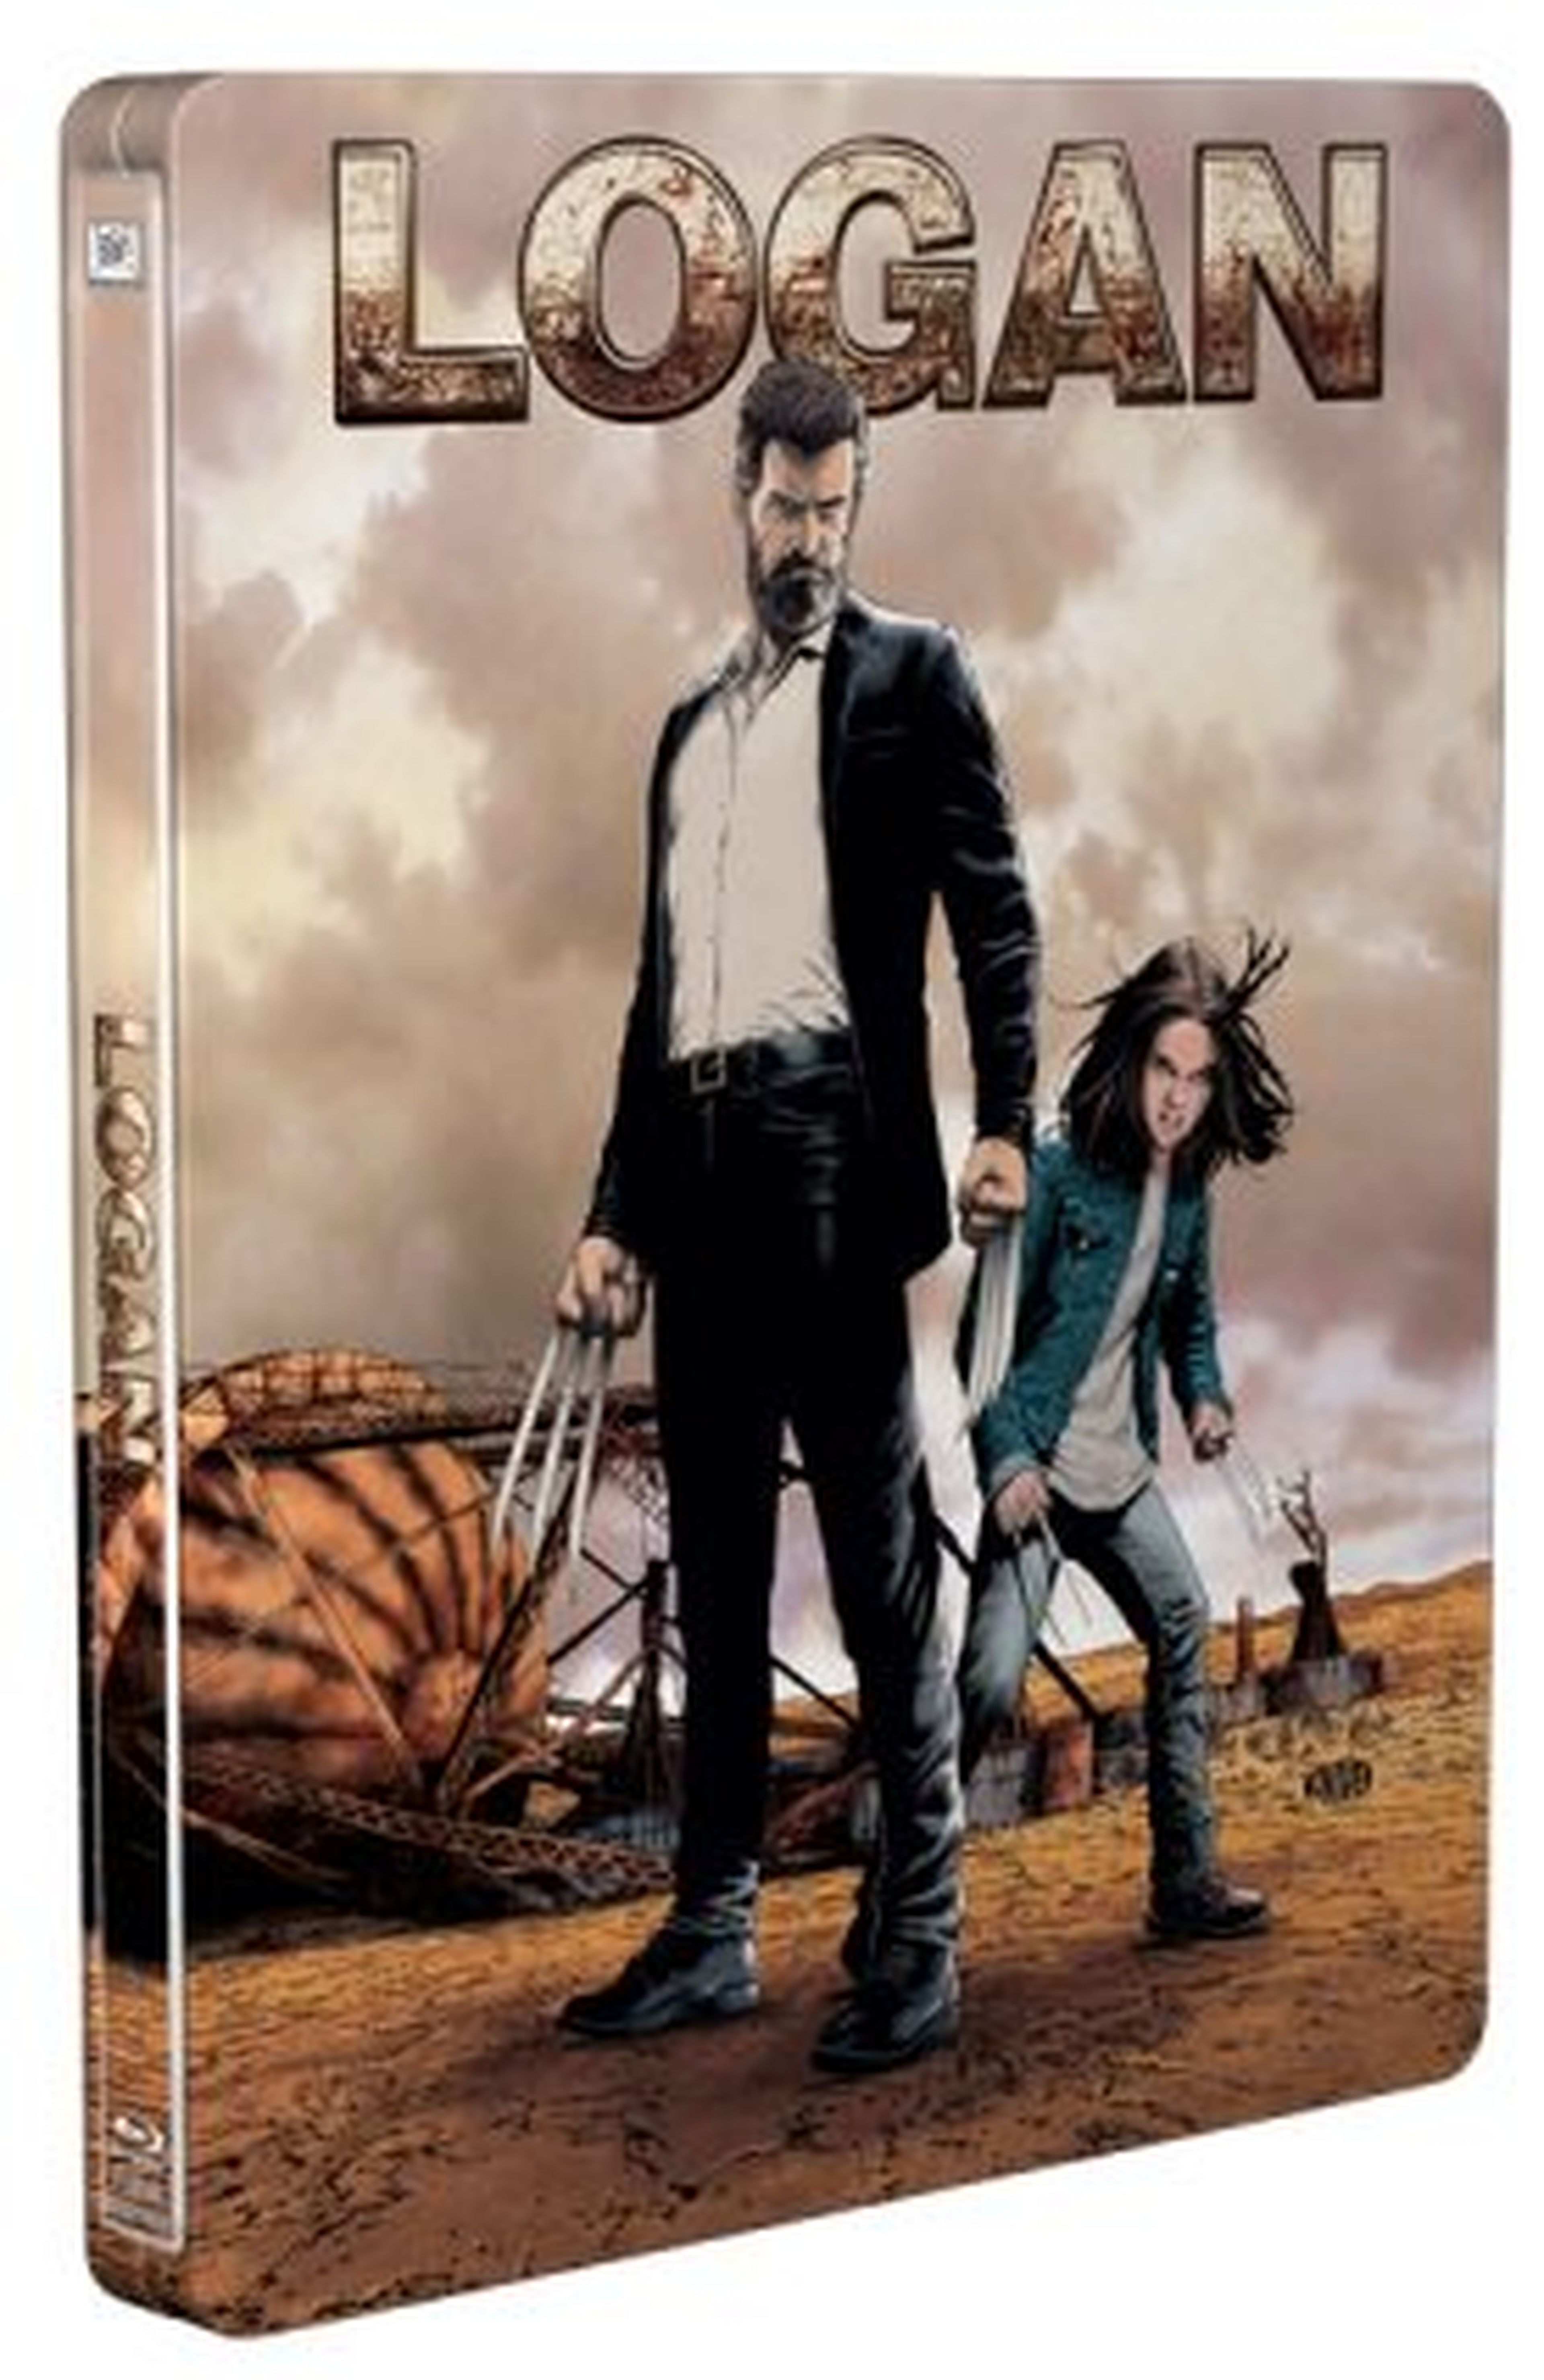 Logan Blu-ray